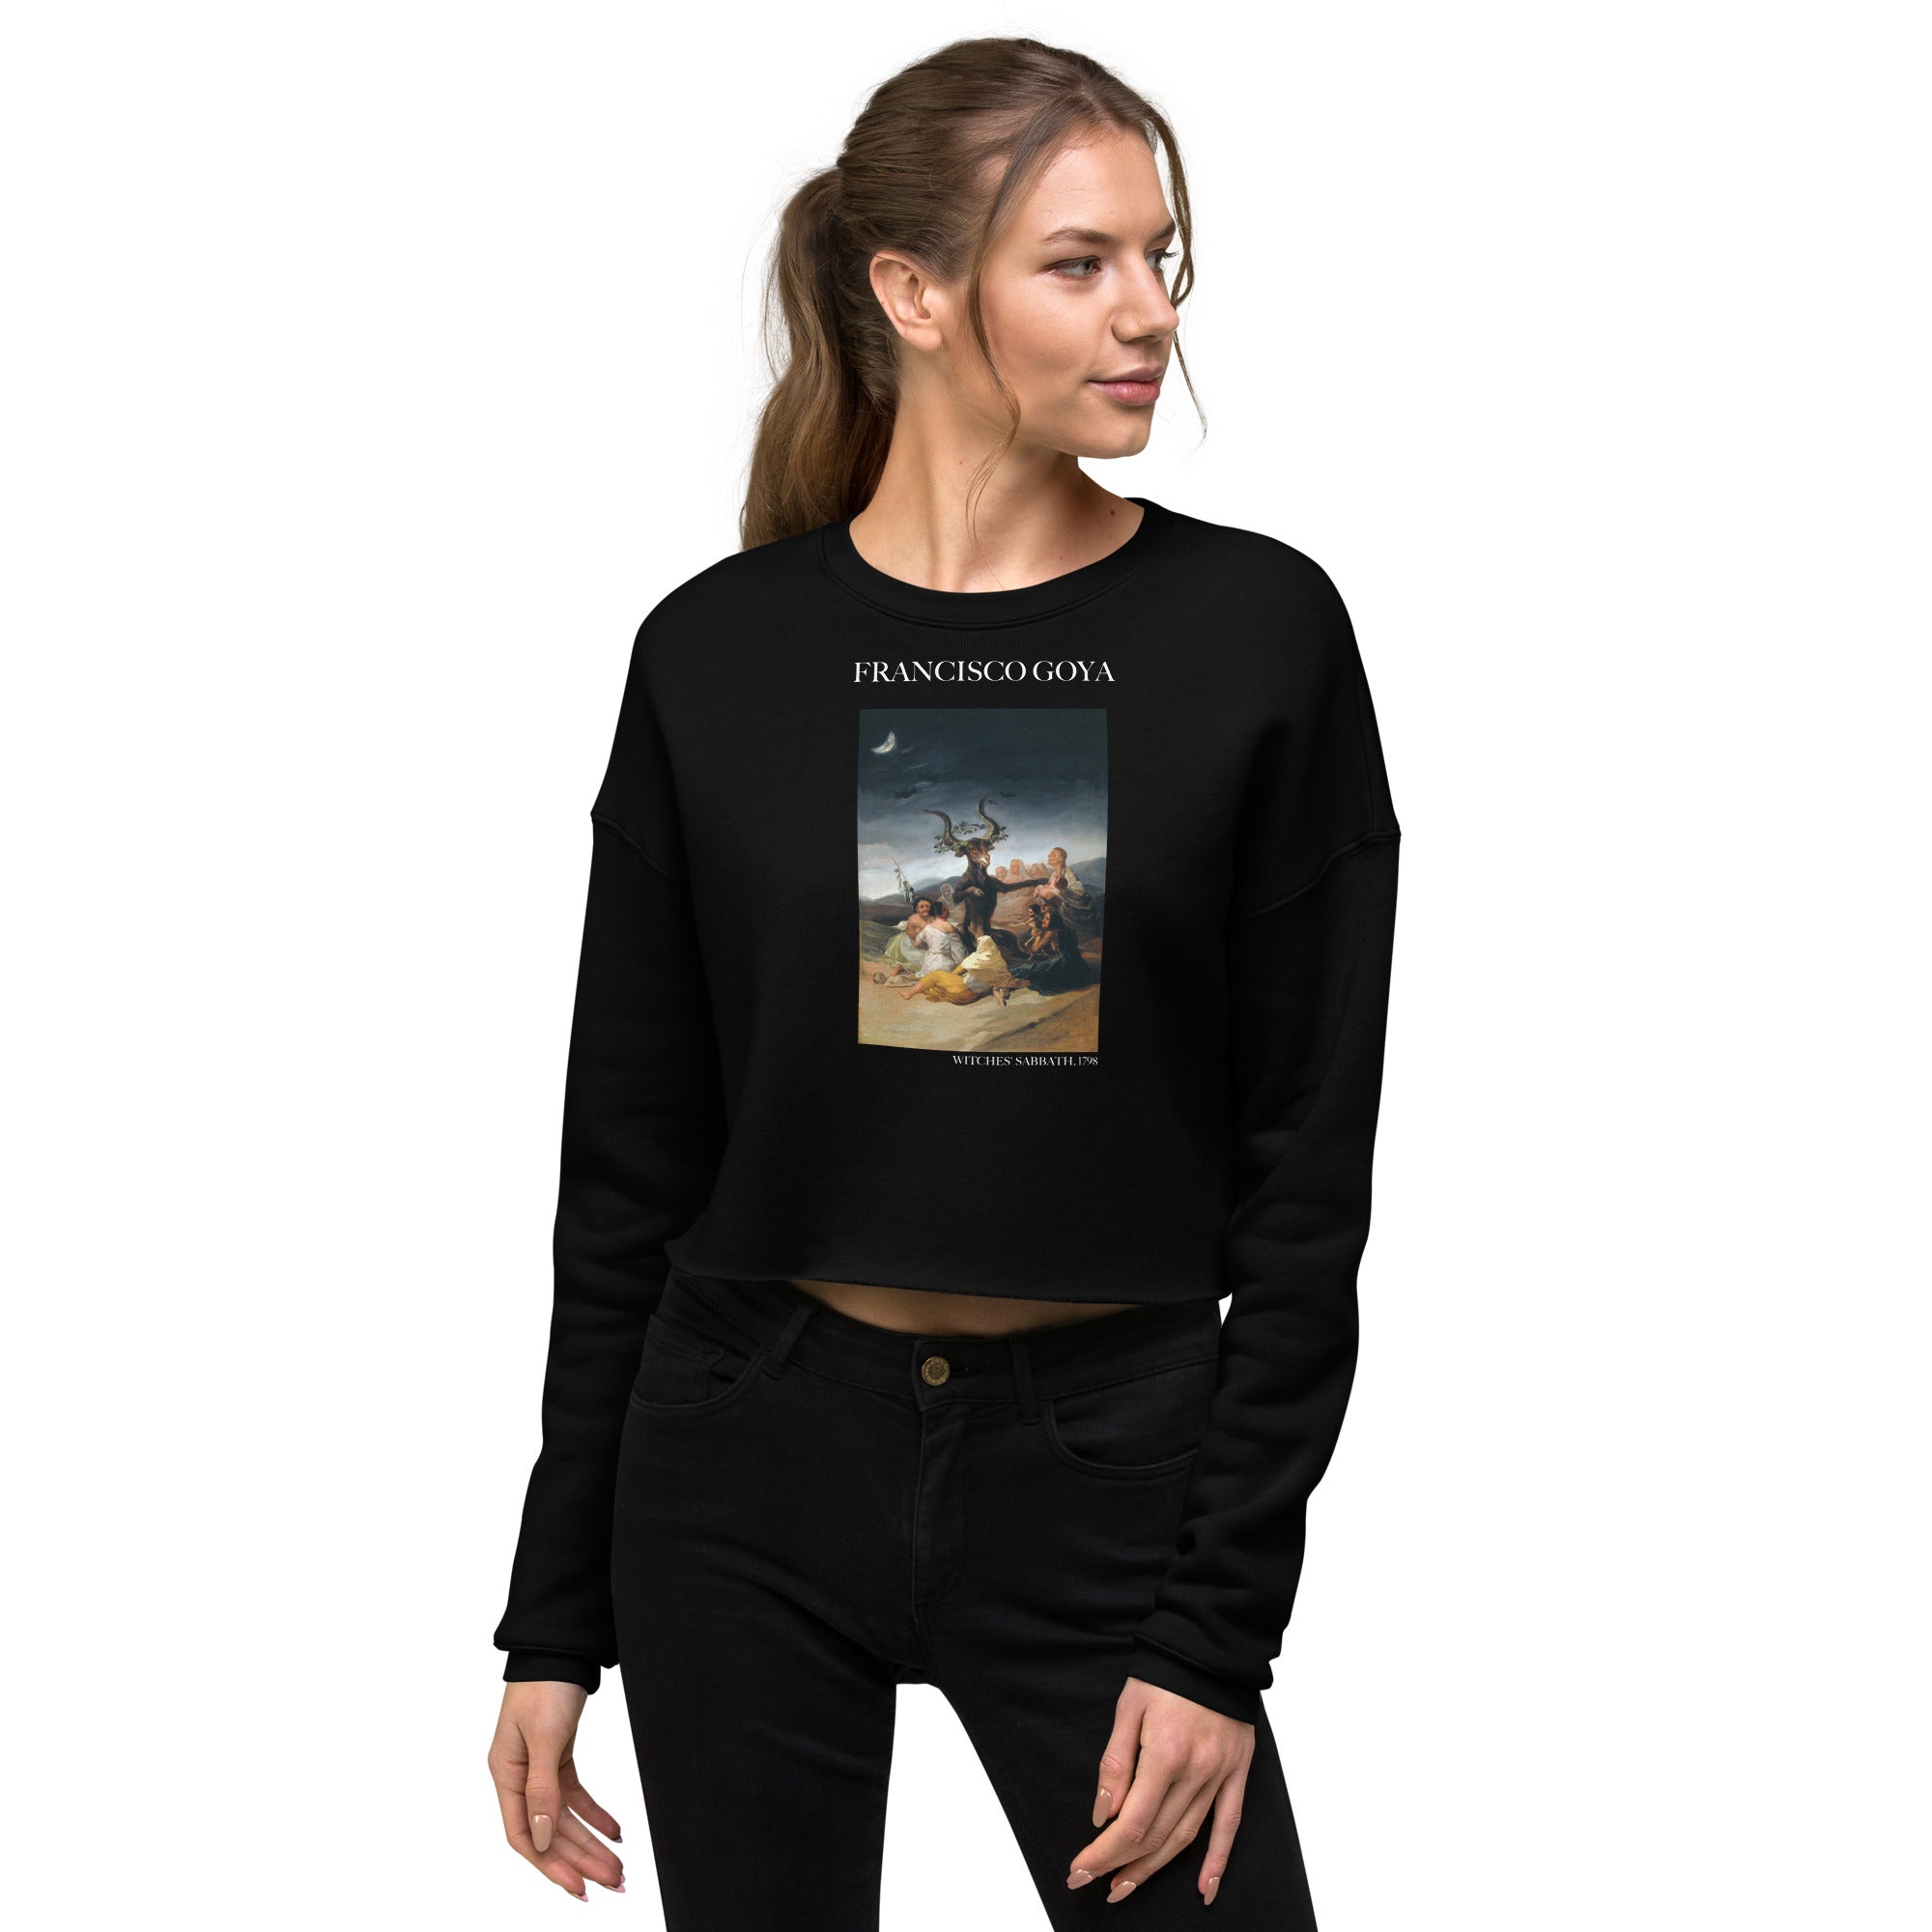 Francisco Goya 'Hexensabbat' Berühmtes Gemälde Kurzes Sweatshirt | Premium Art Kurzes Sweatshirt